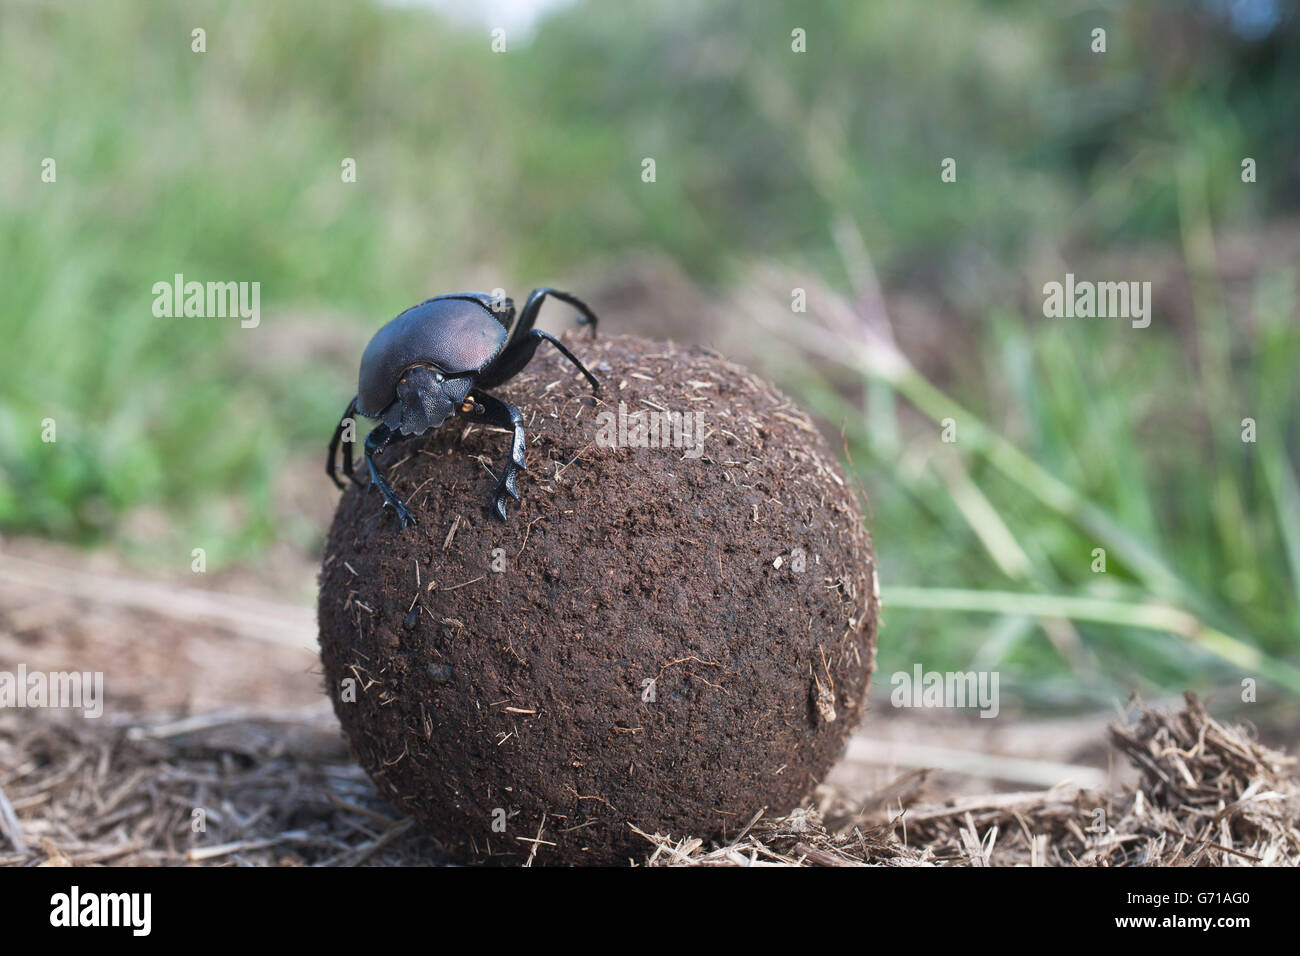 Escarabajos, bola rodante de estiércol, Umfolozi-Hluhluwe National Park, South Africa / Scarabaeus (spec). Foto de stock